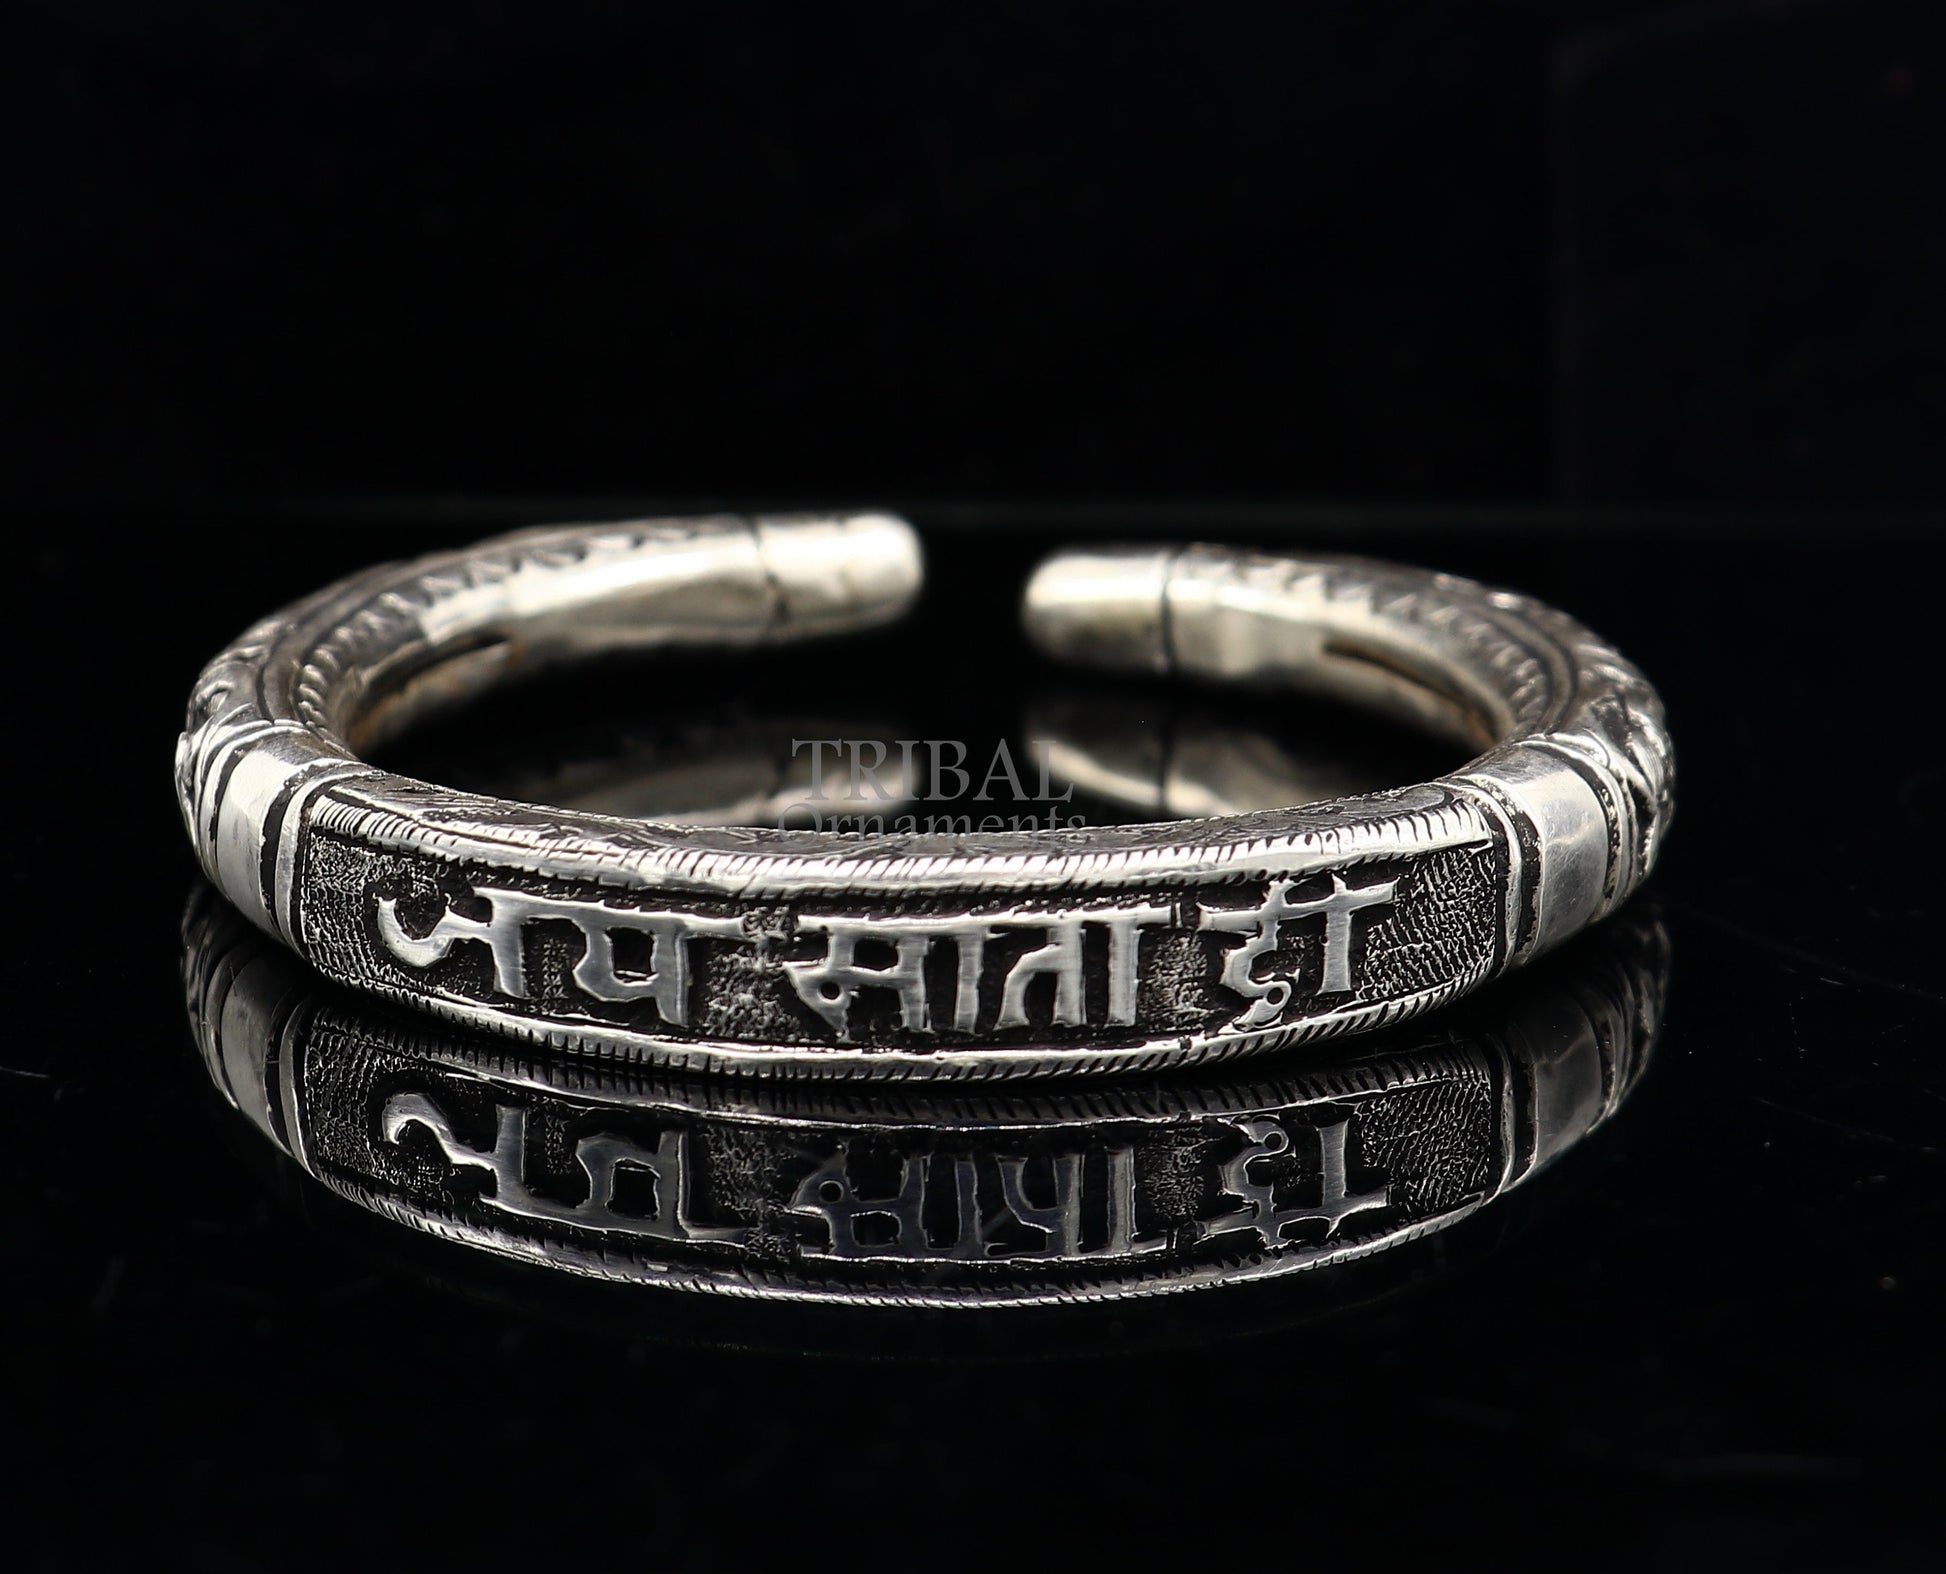 925 sterling silver handmade custom design Divine mantra " Jai Mata Di" Bangle cuff bracelet kada, best gifting unisex tribal jewelry NSK656 - TRIBAL ORNAMENTS